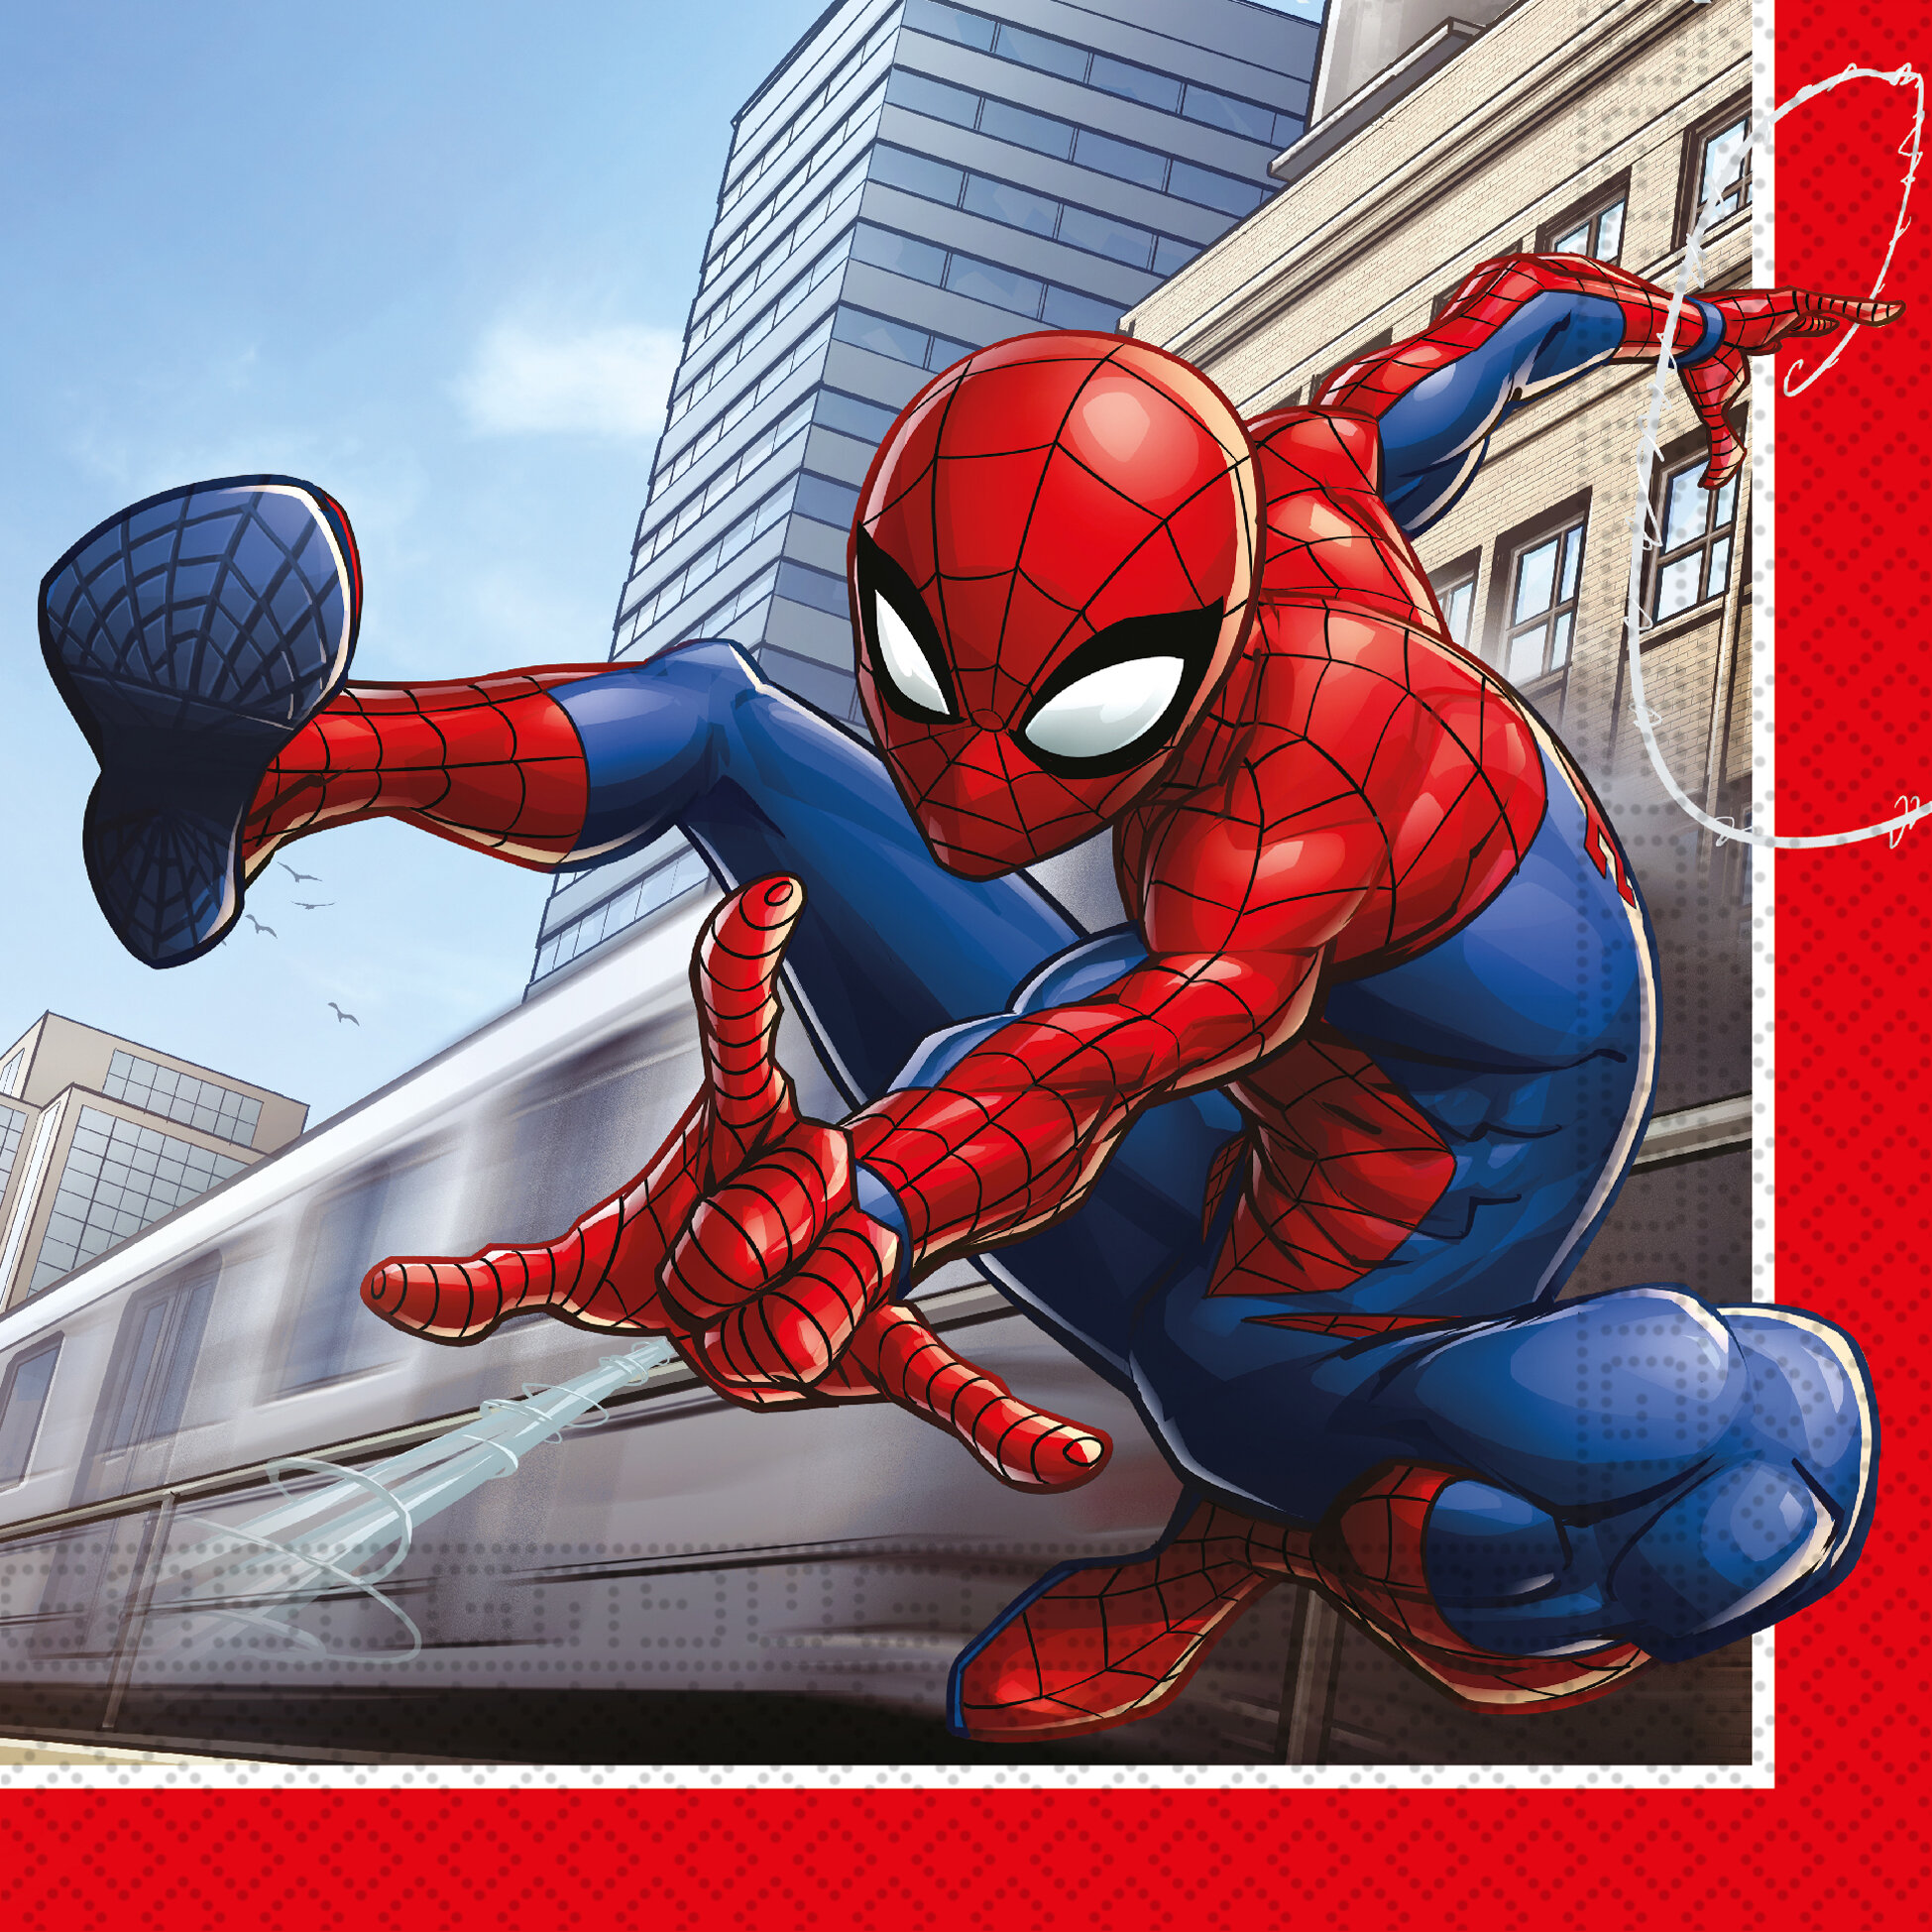 Spiderman - Servetit 20 kpl